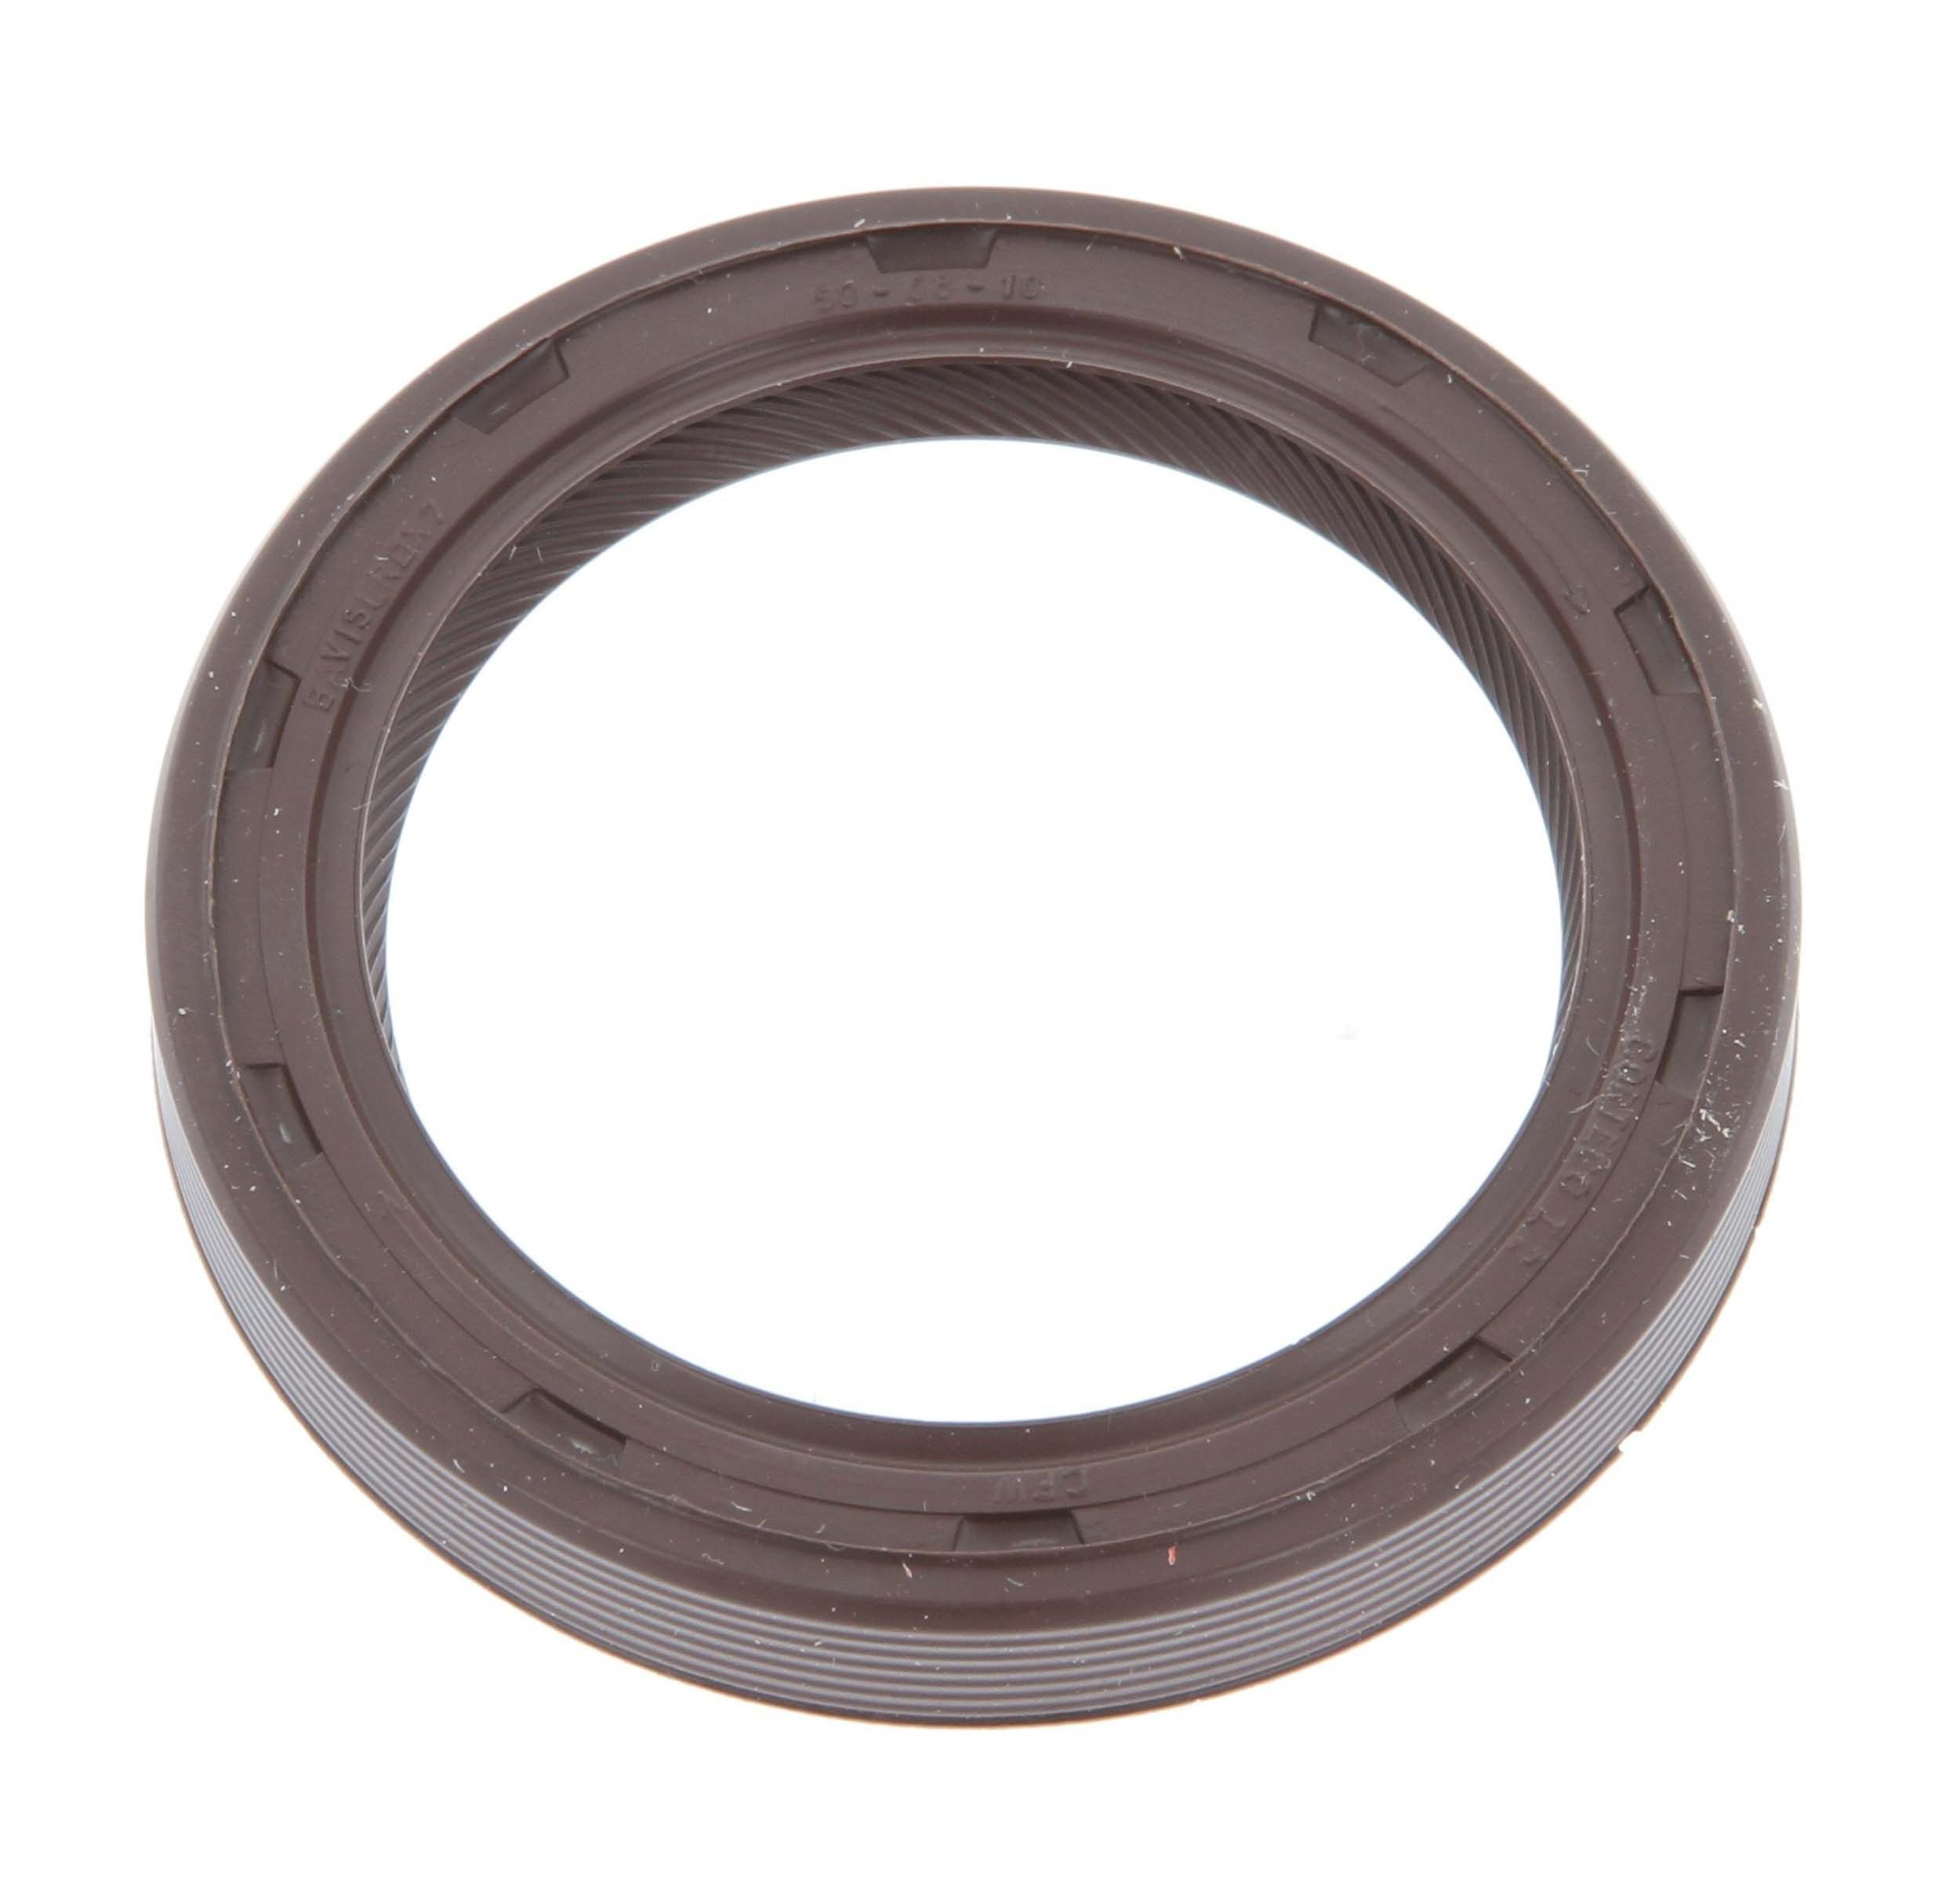 CORTECO 12013865B Crankshaft seal frontal sided, FPM (fluoride rubber)